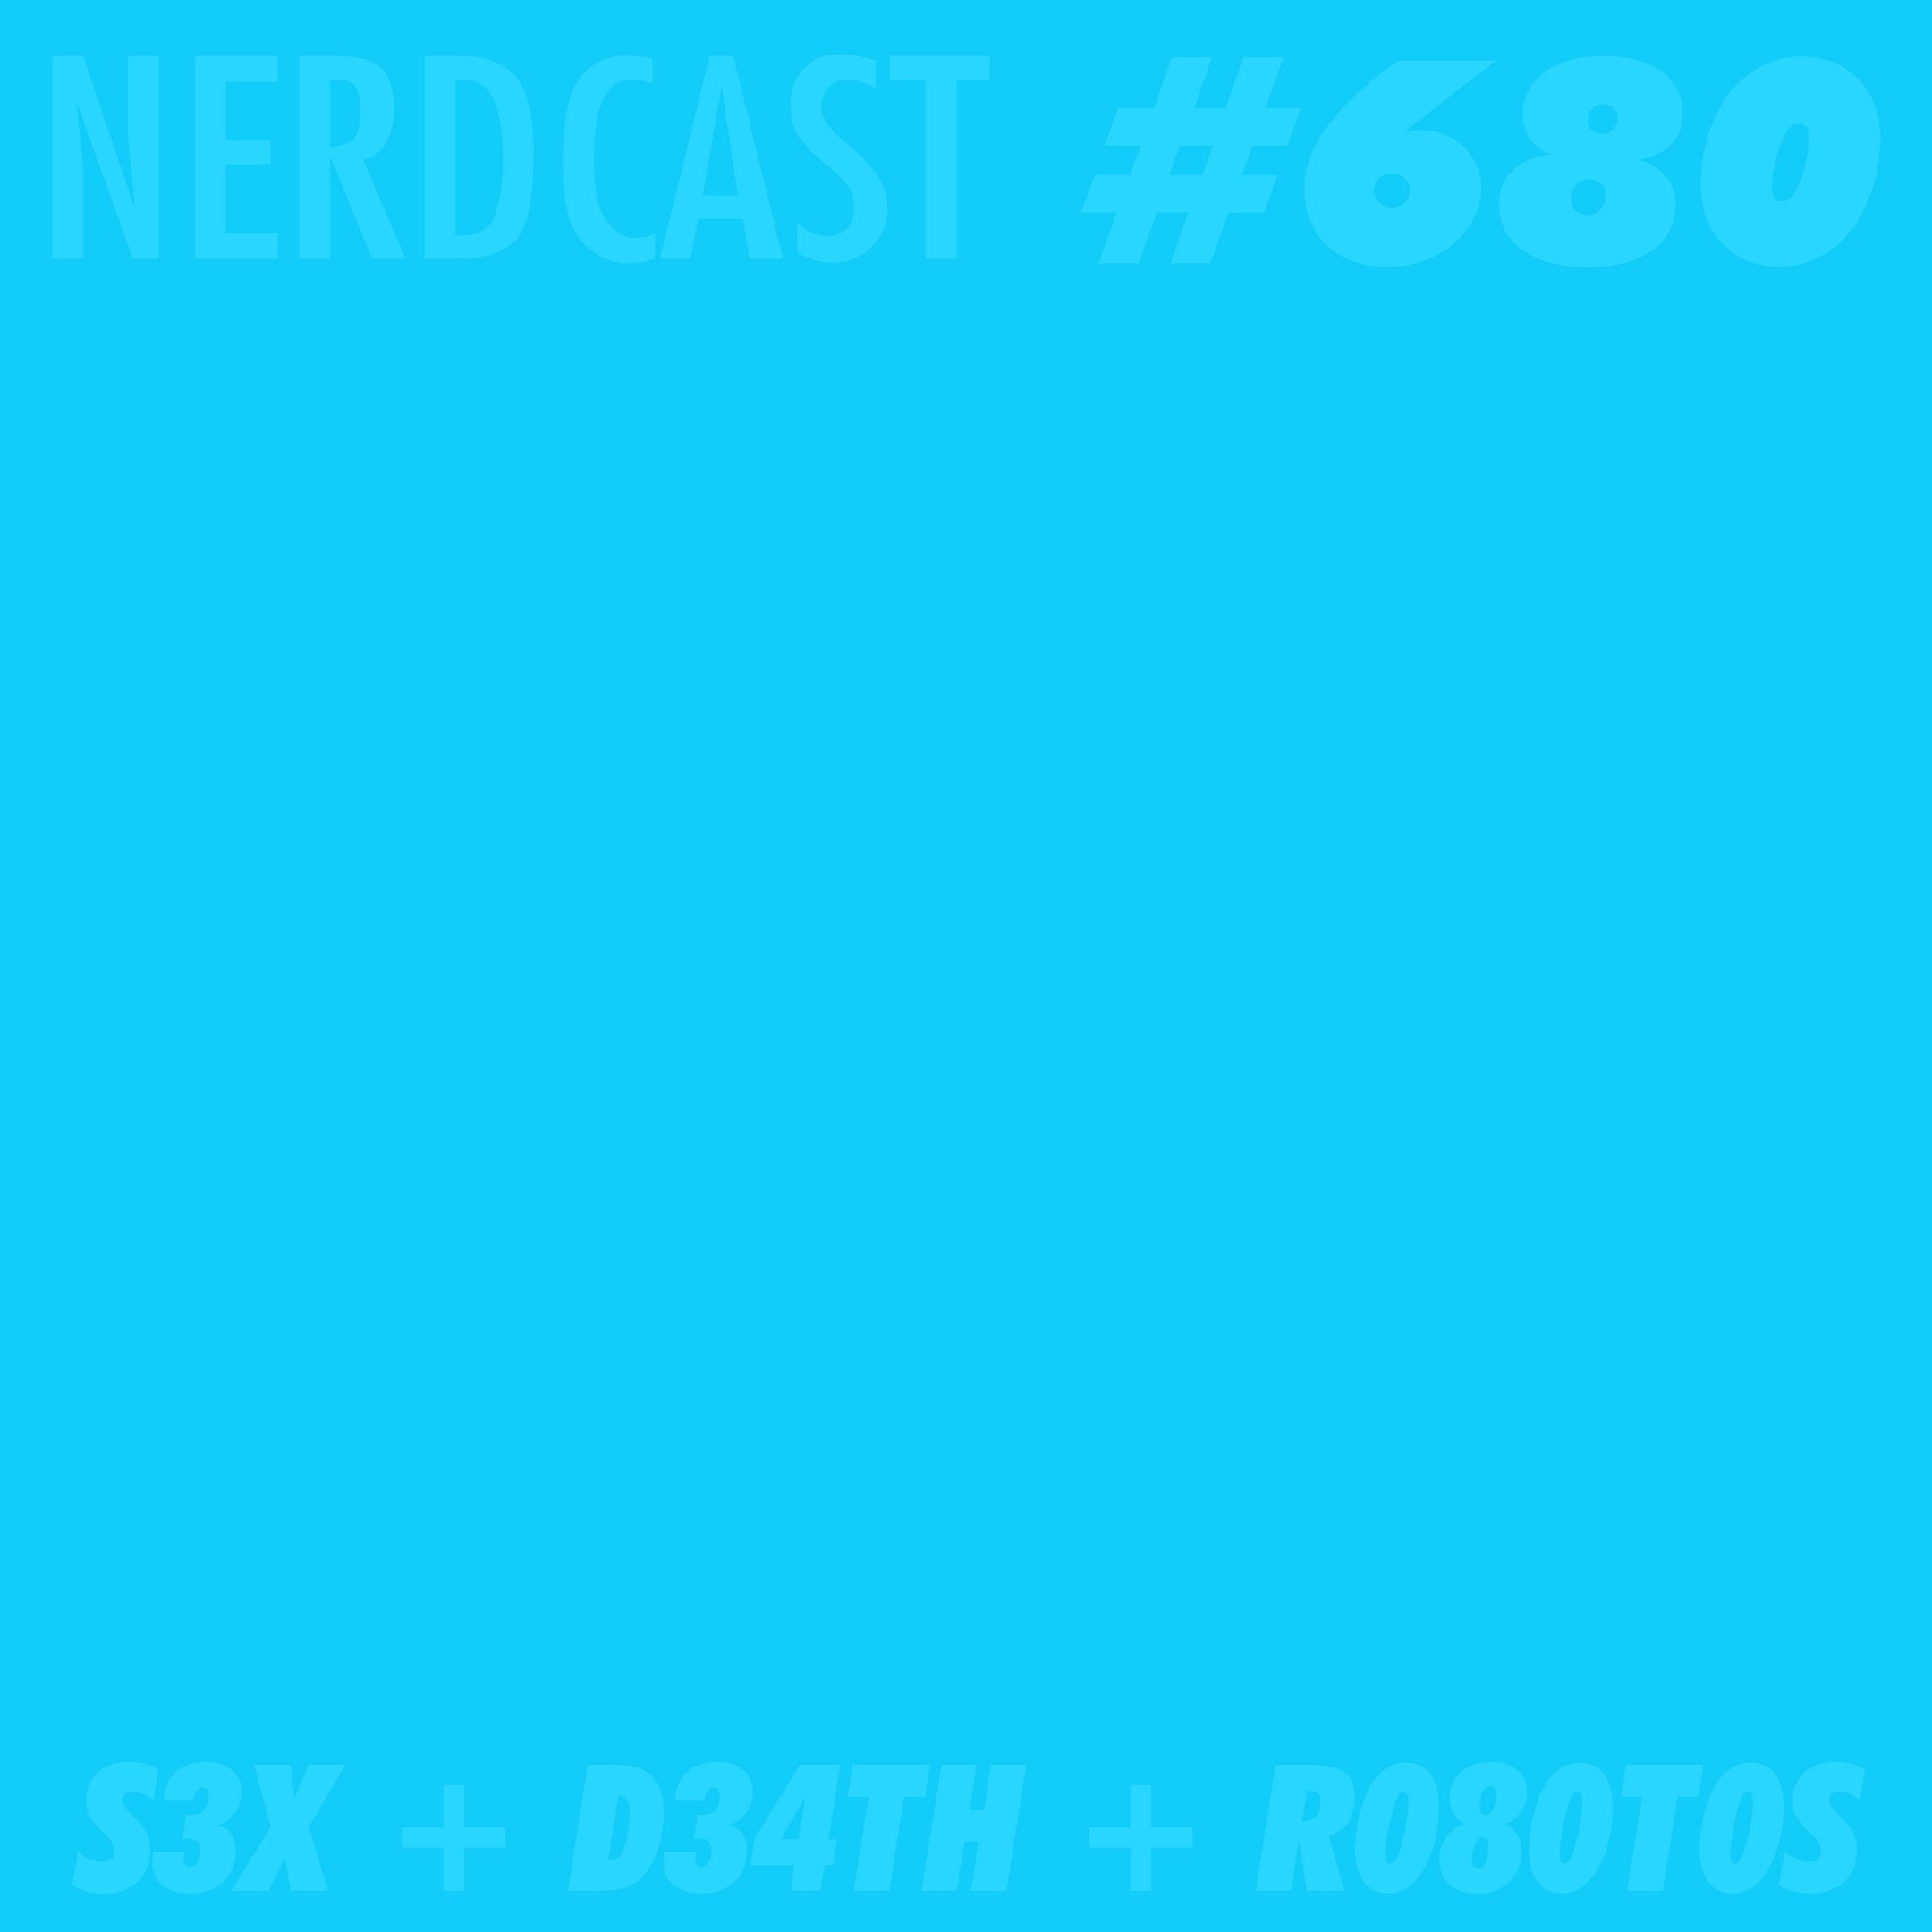 NerdCast 680 - S3X + D34TH + R080T0S